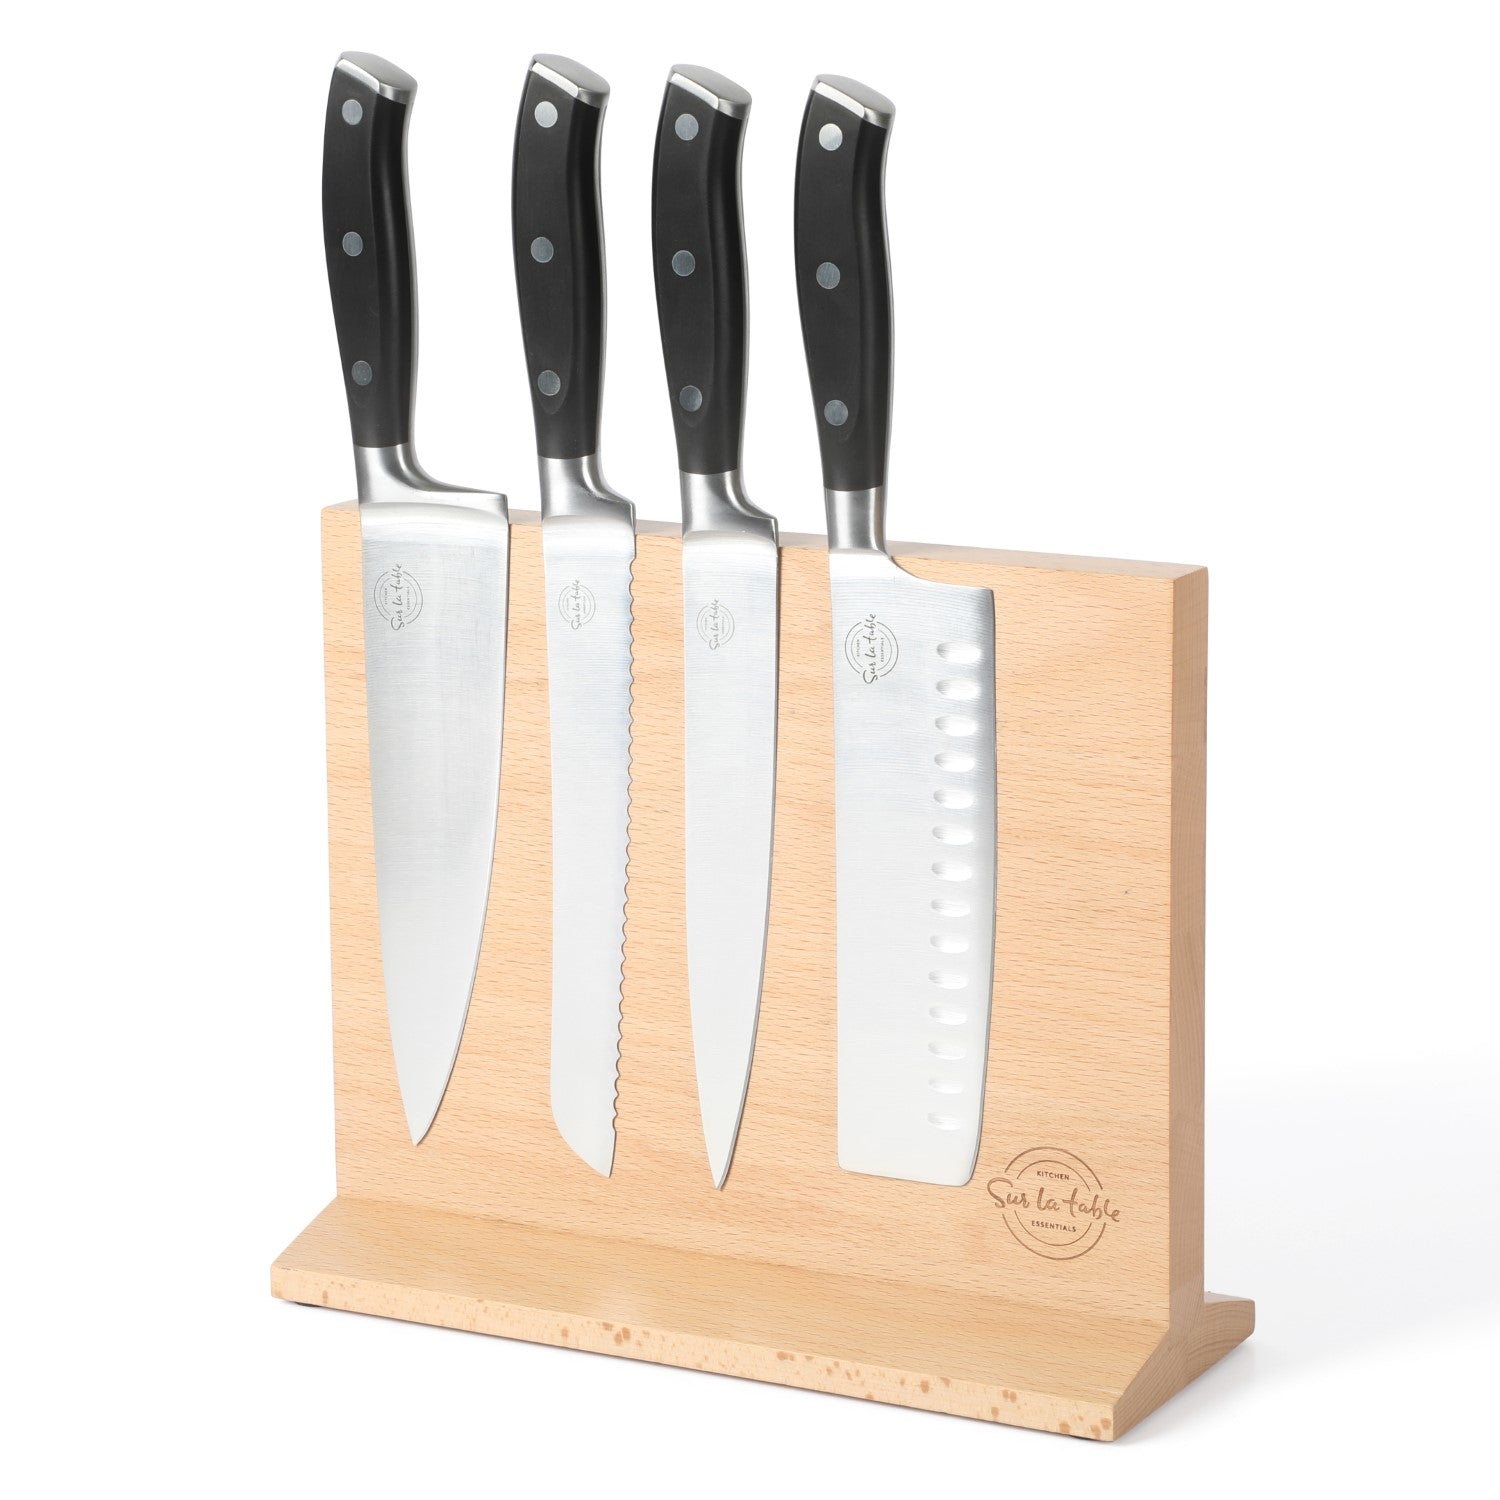 VITT Kitchen Set - 5 Piece Durable Knife Block with Scissors